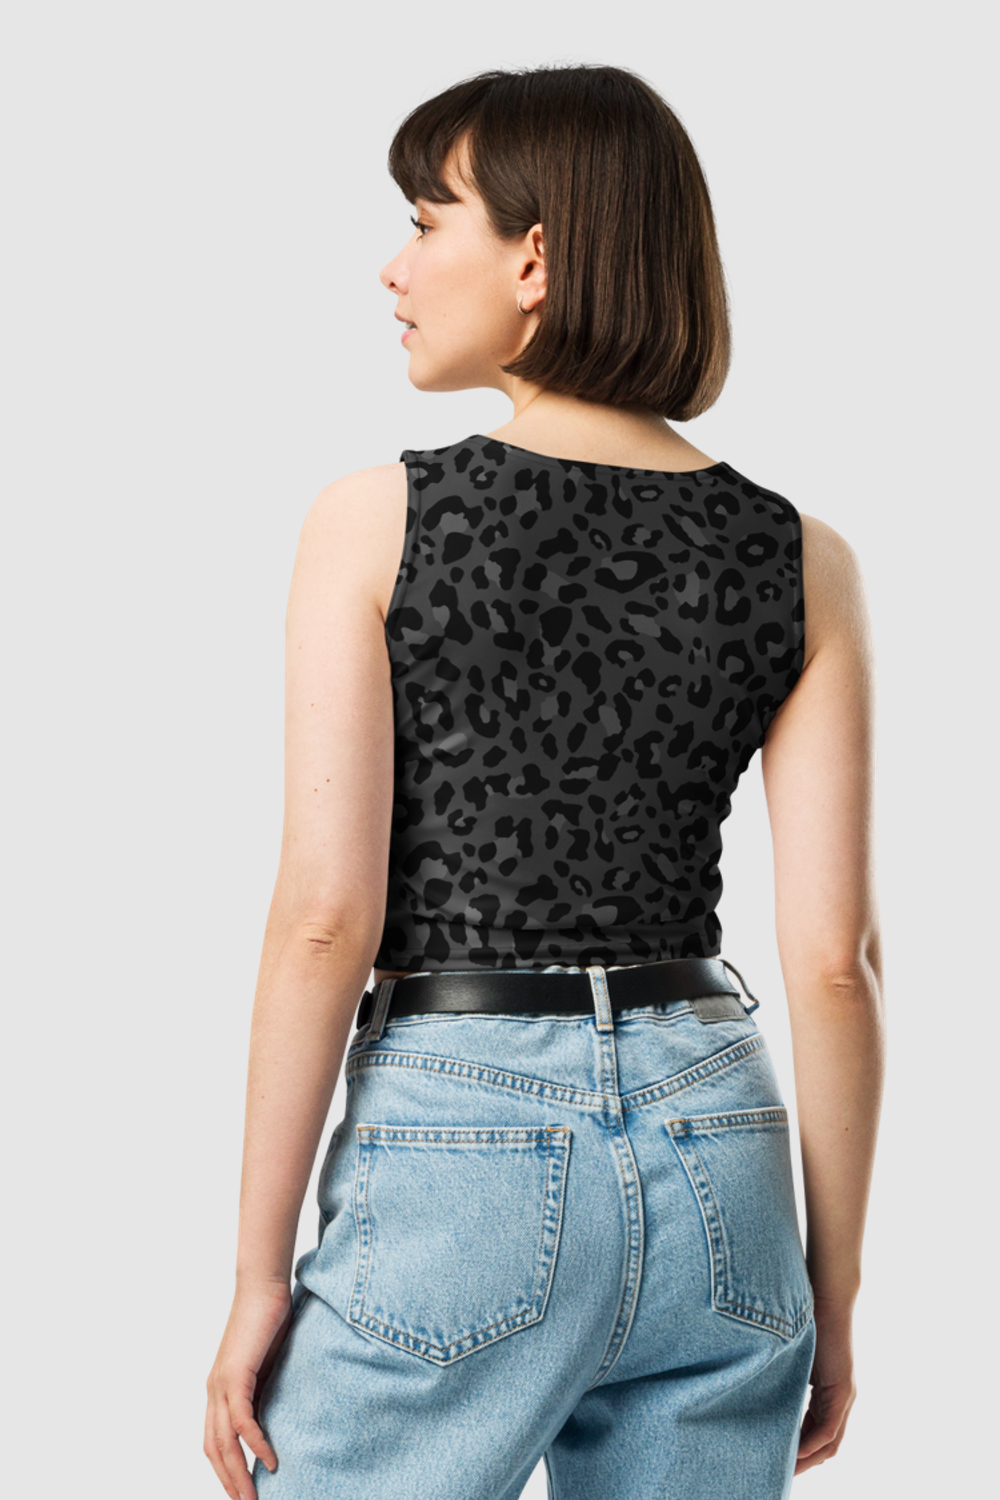 Eclipse Leopard Print Women's Sleeveless Fitted Crop Top